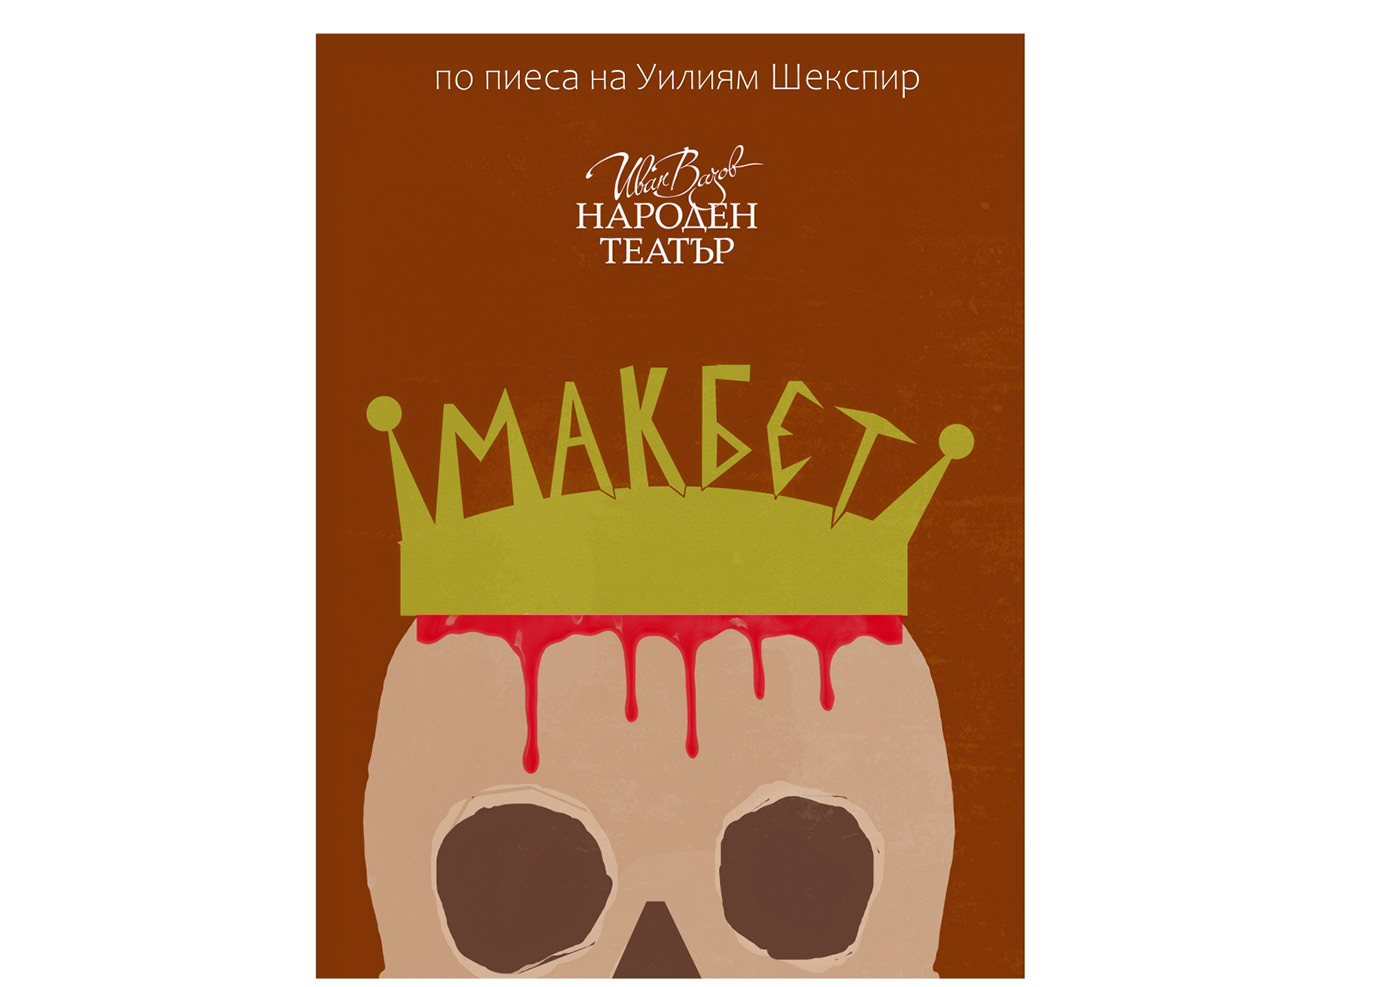 poster book cover book University school gatsby Macbeth art deco bulgarian Theatre